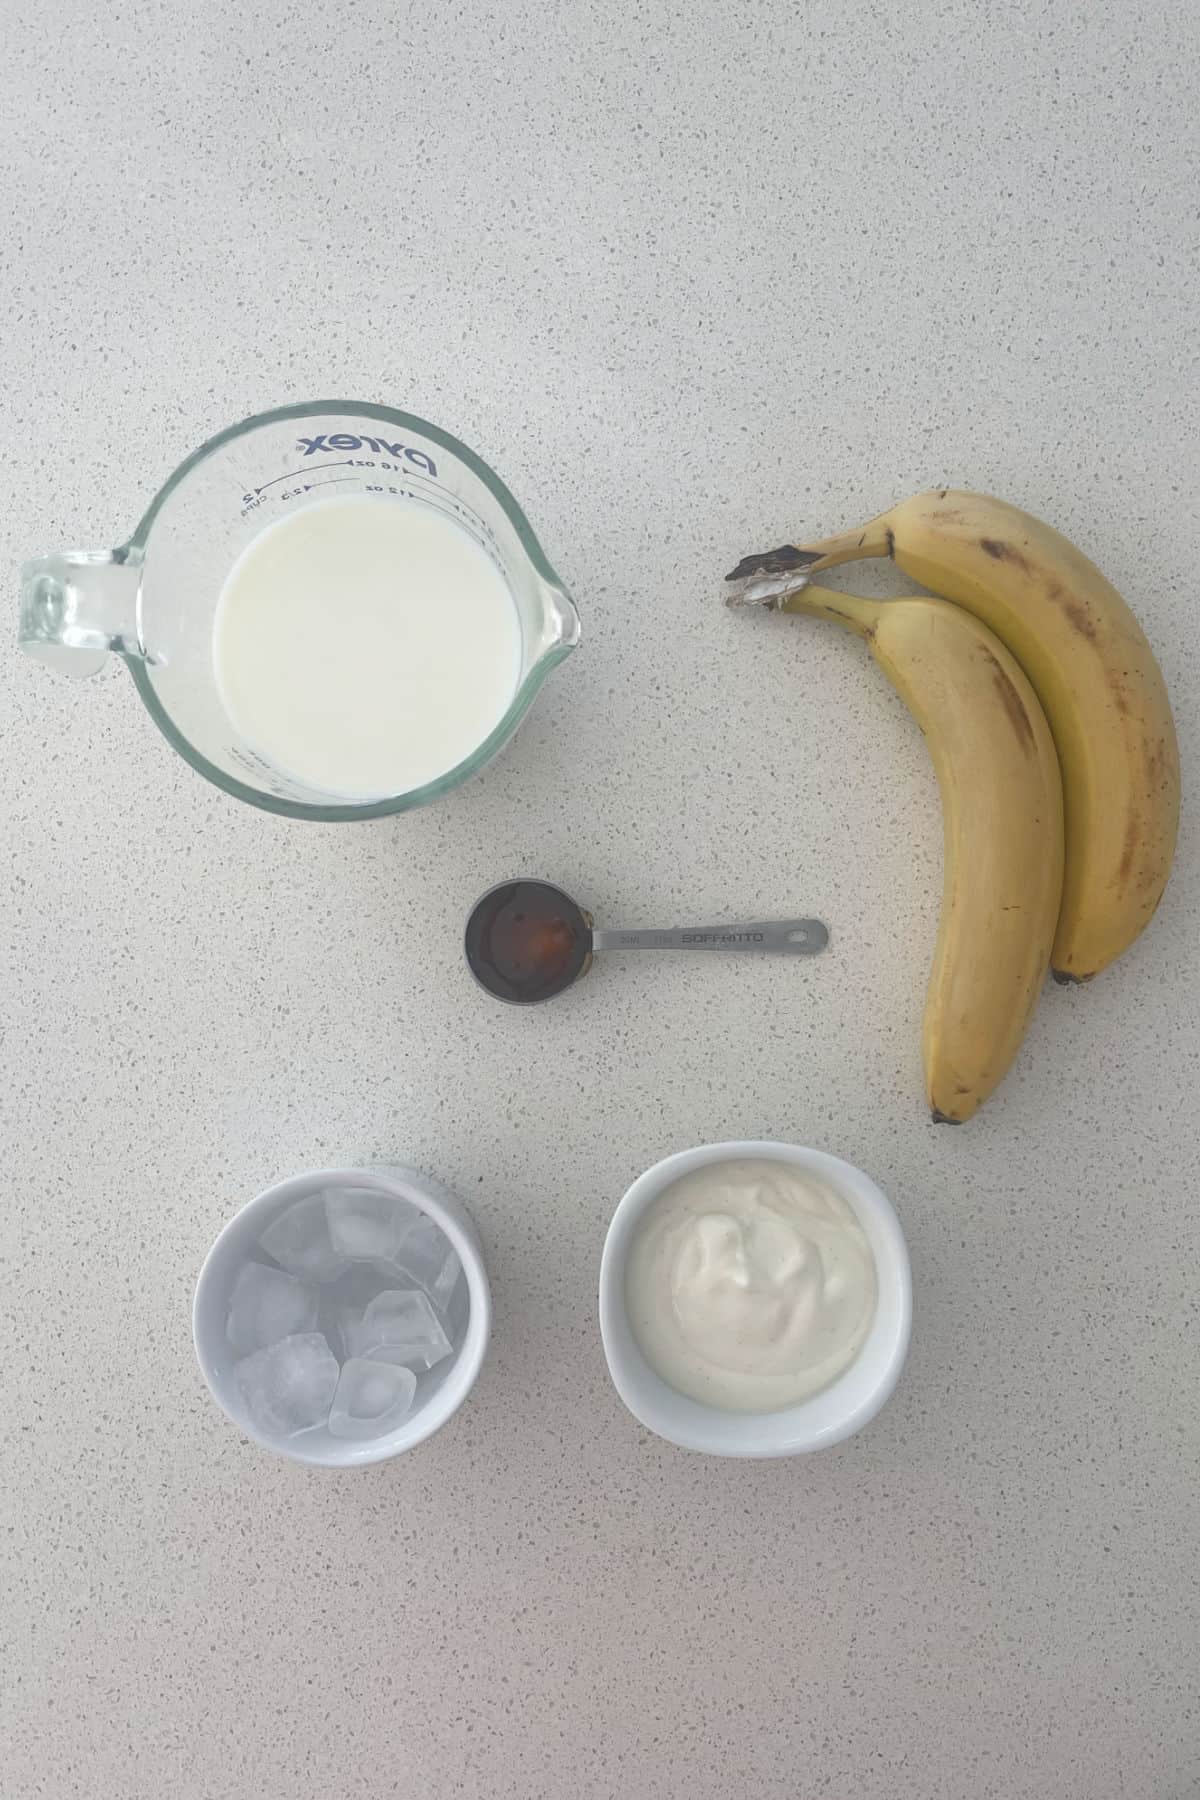 Ingredients to make a banana smoothie